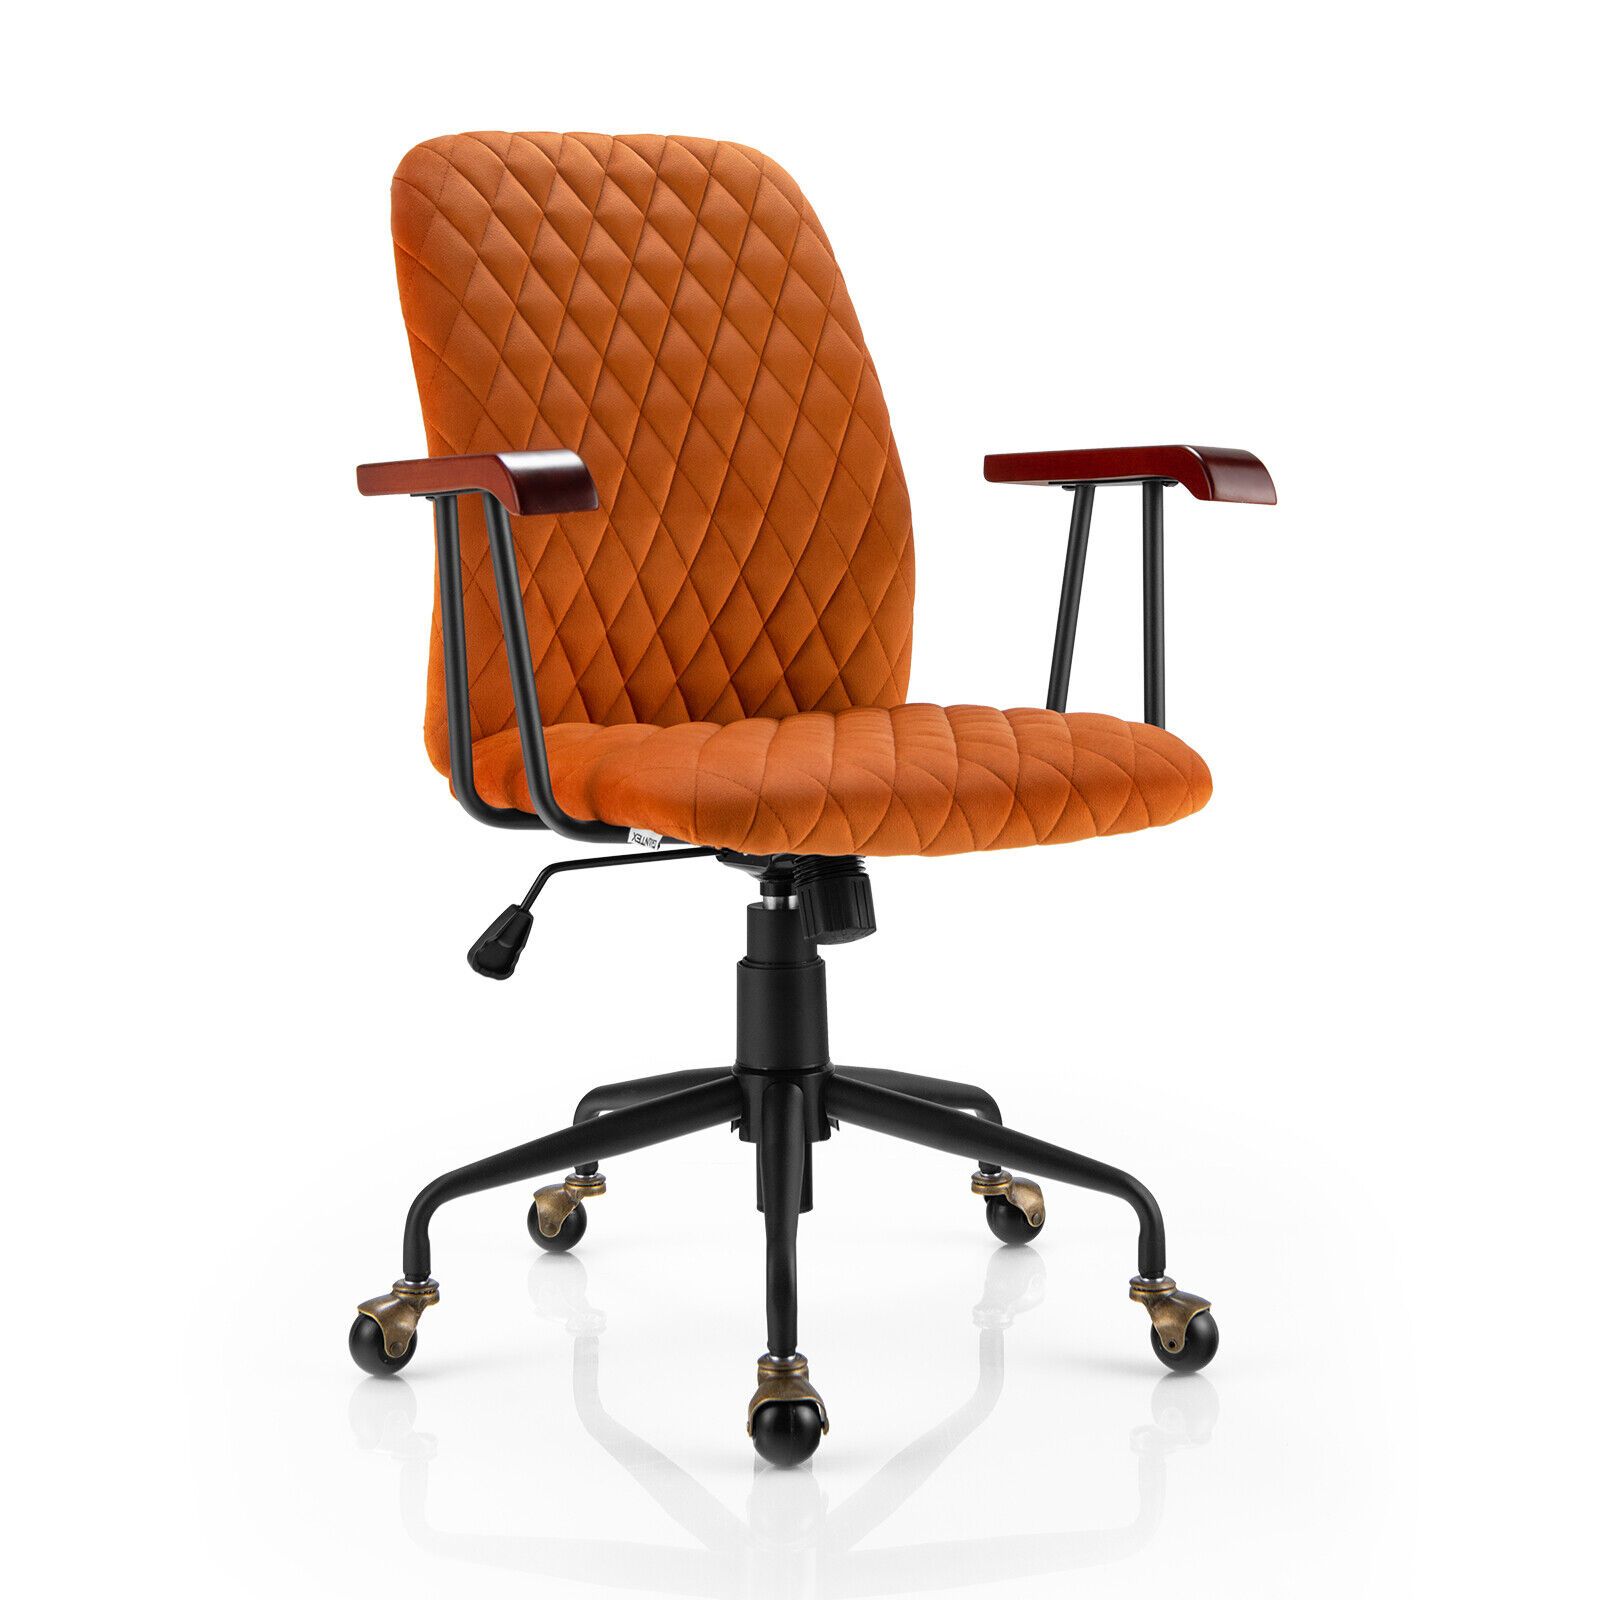 Adjustable Velvet Rocking Leisure Chair with Padded Seat - Orange